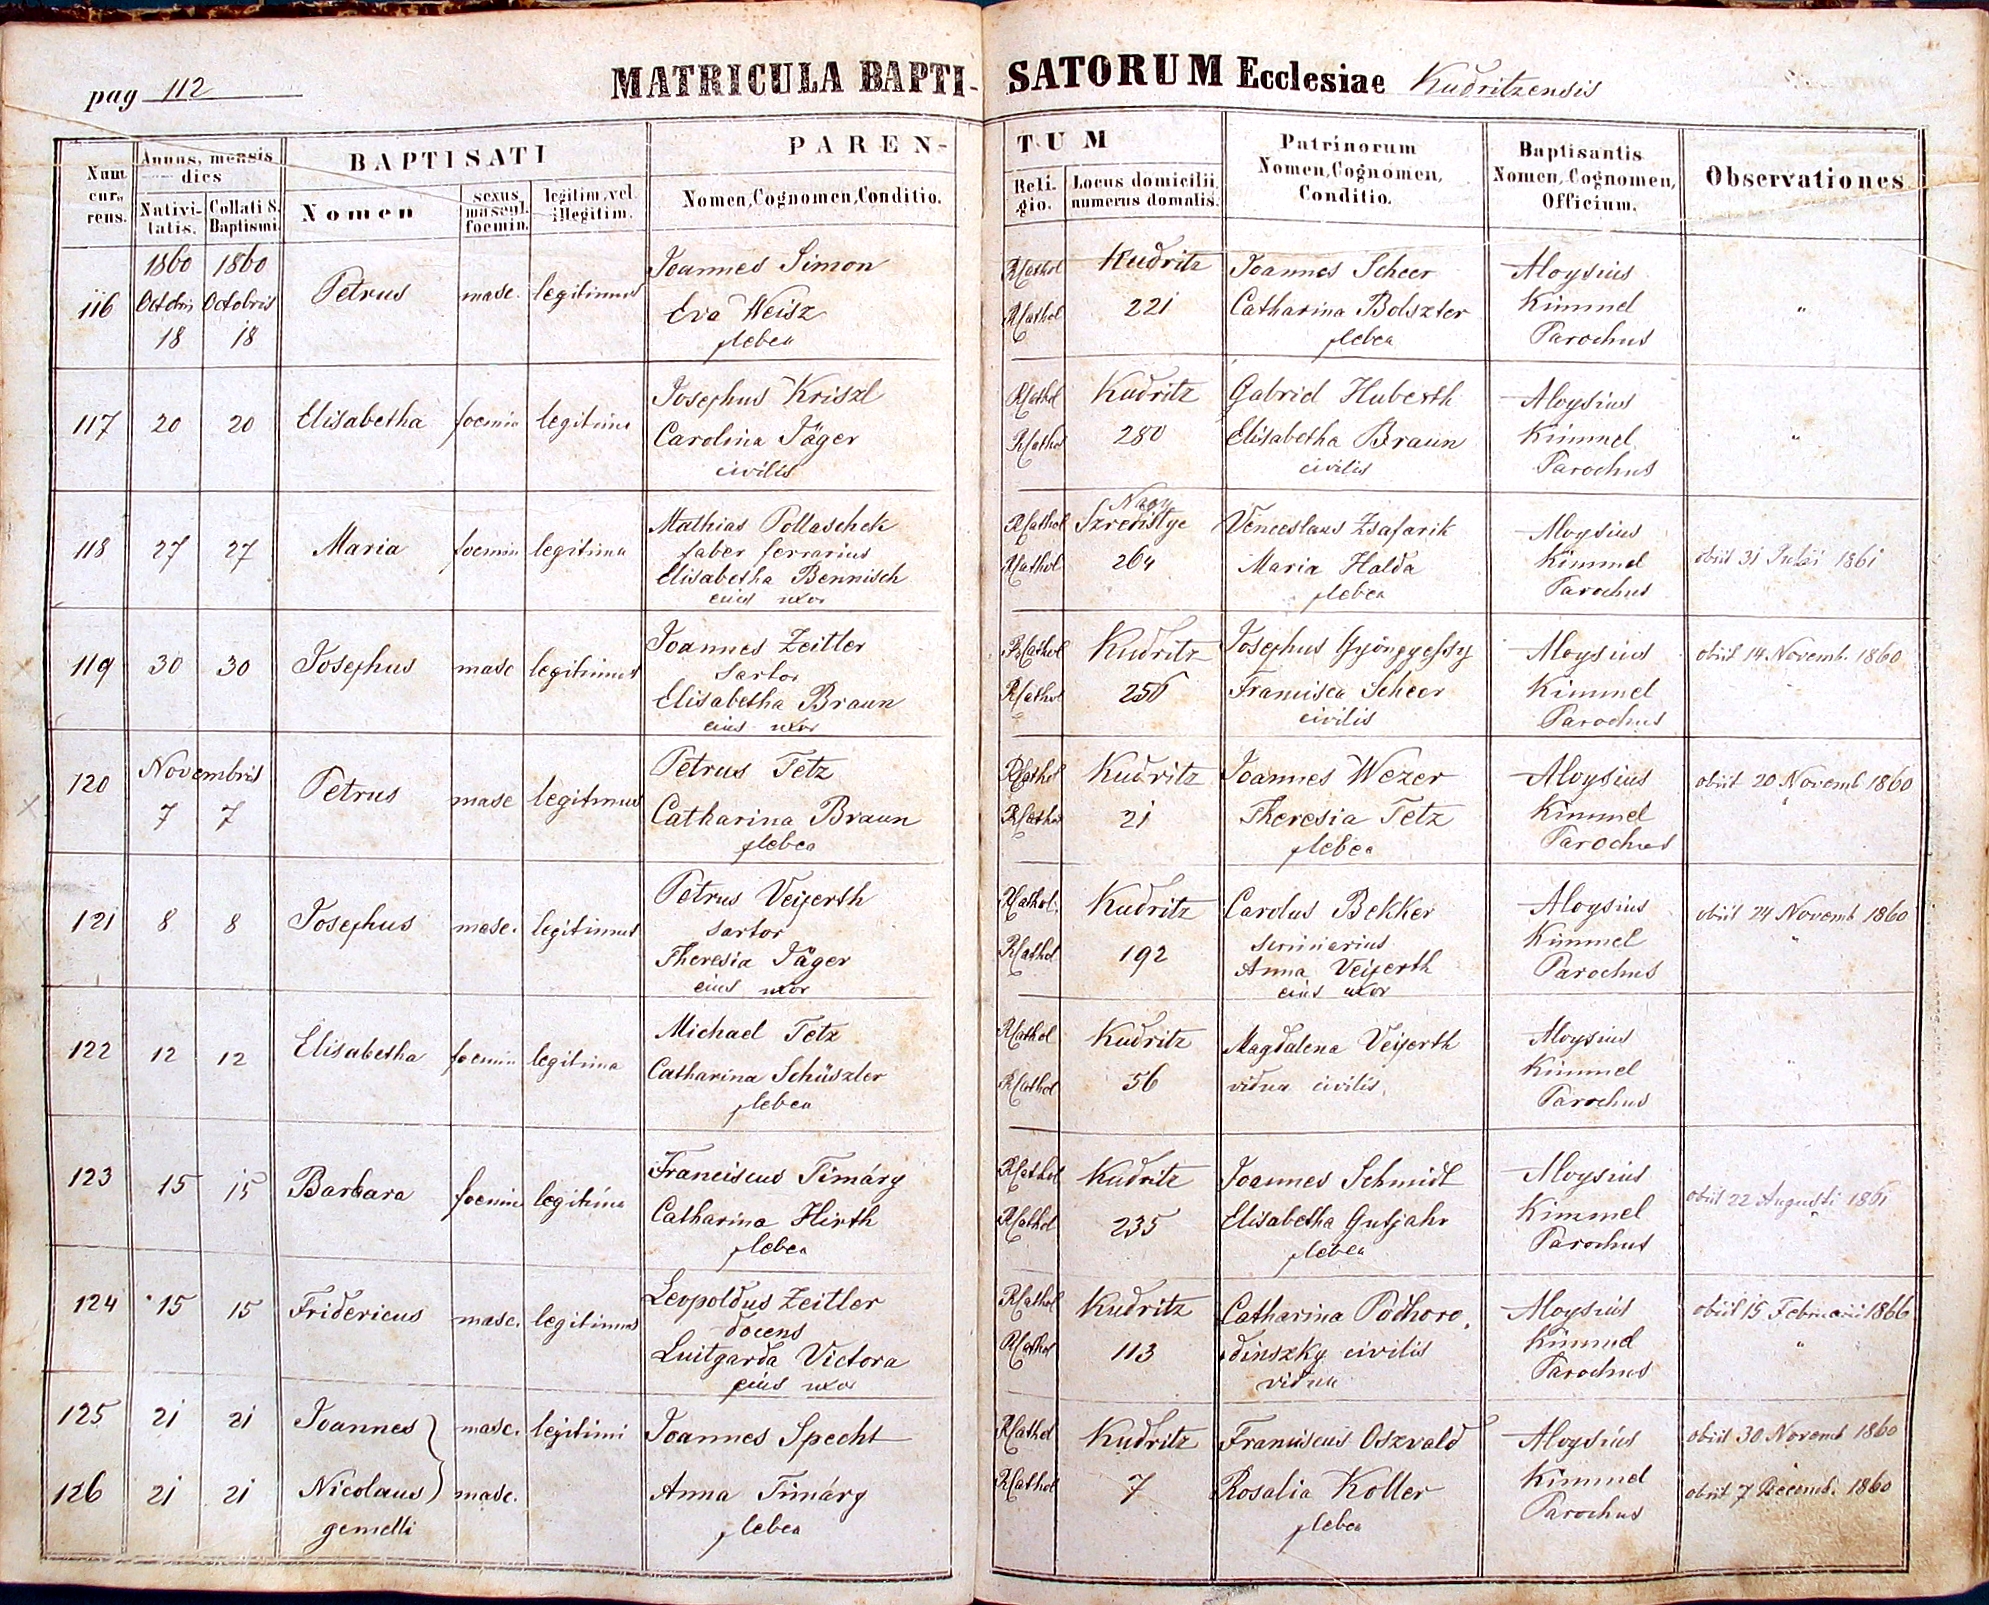 images/church_records/BIRTHS/1852-1870B/112